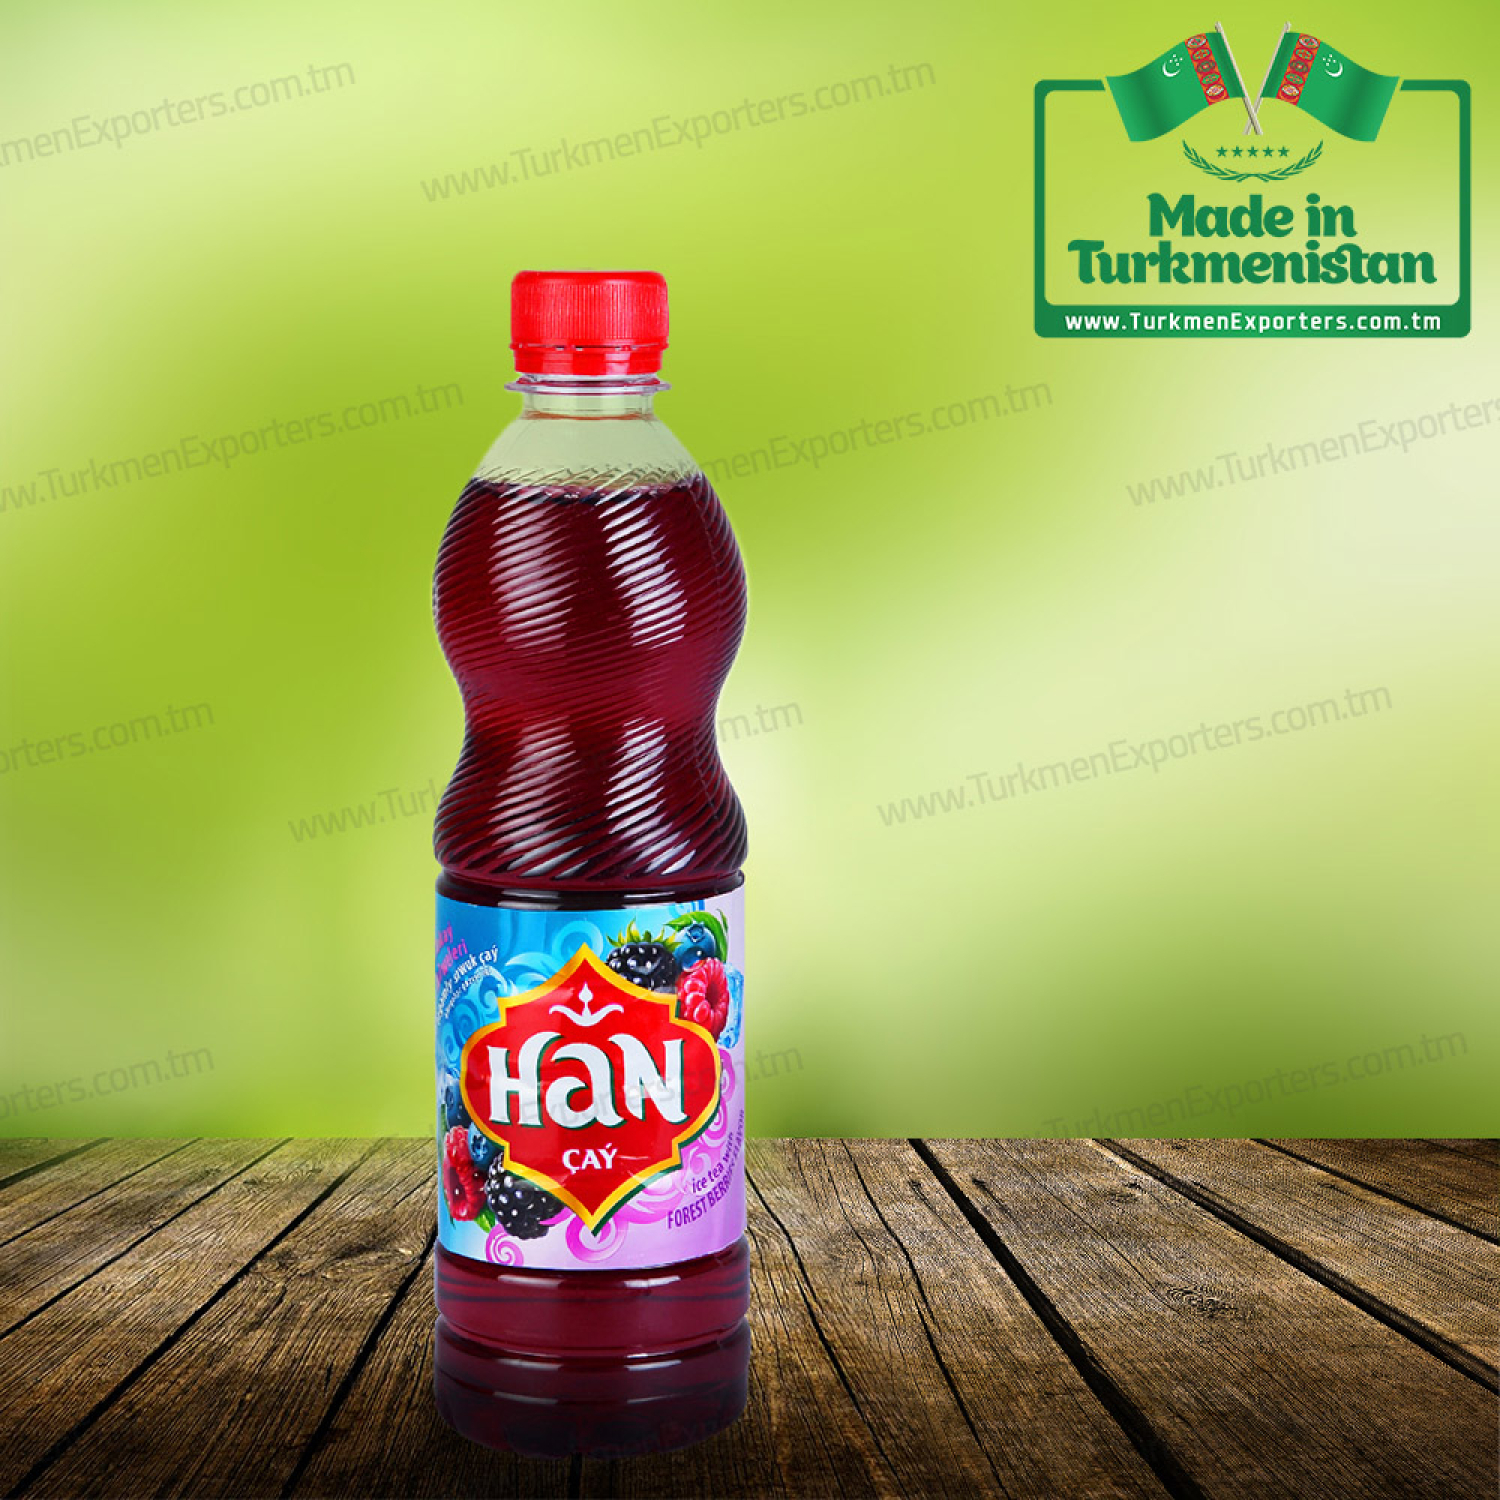 Berries flavoured ice tea Han Cay 0,5L | Parahat individual enterprise